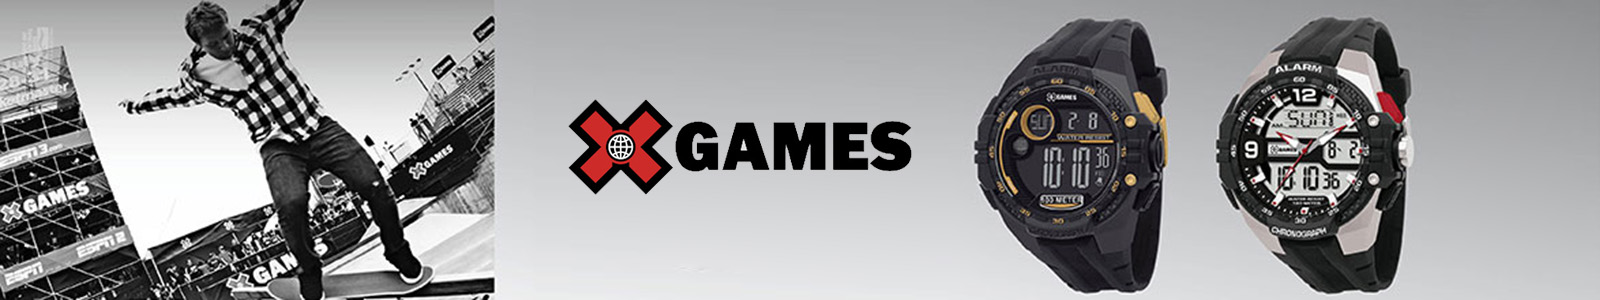 X-Games-banner-categoria